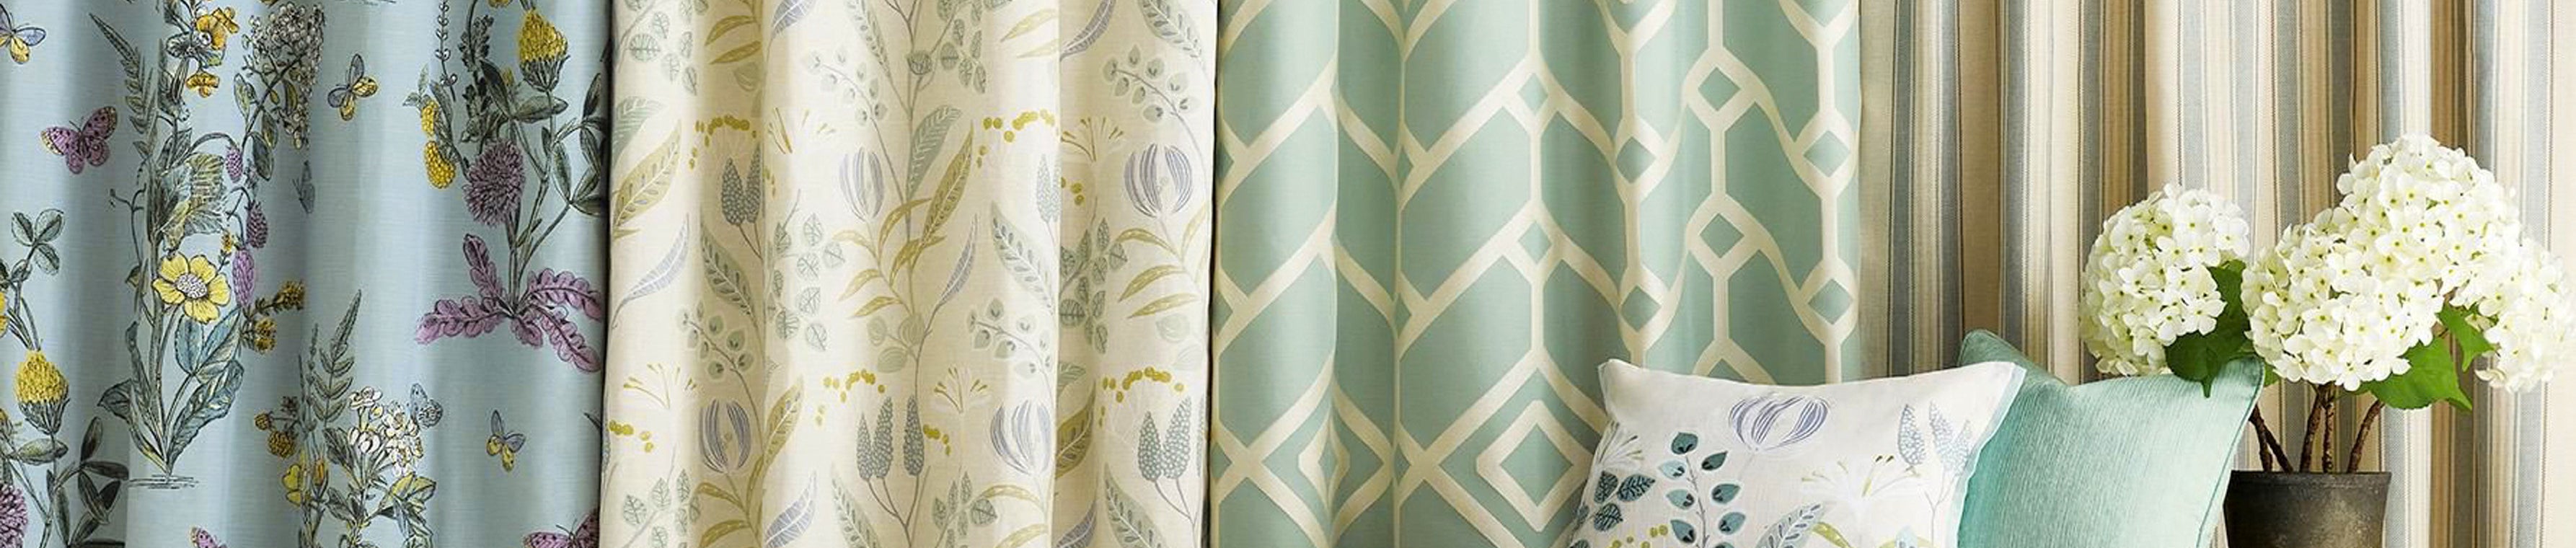 Curtain Fabric | Buy Curtain Fabric Online | Fabrics Galore